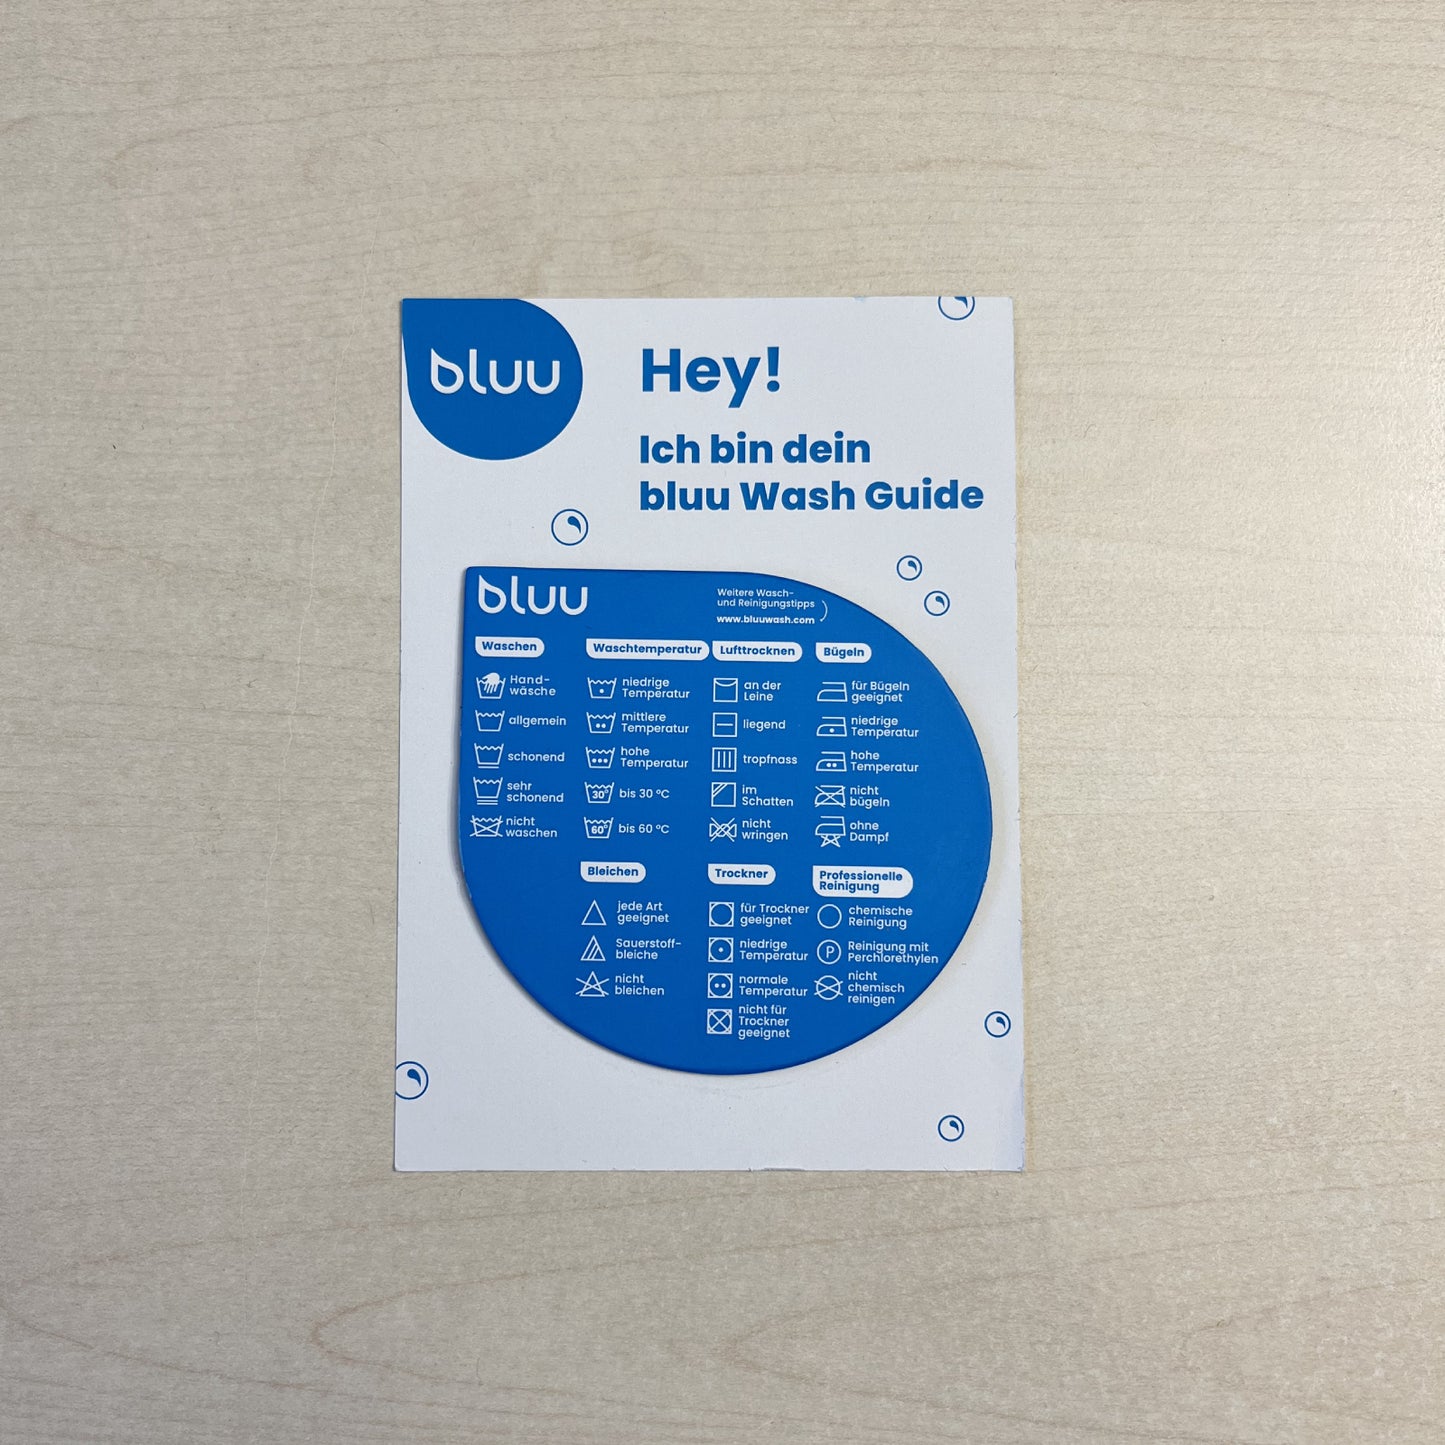 bluu Wash Guide